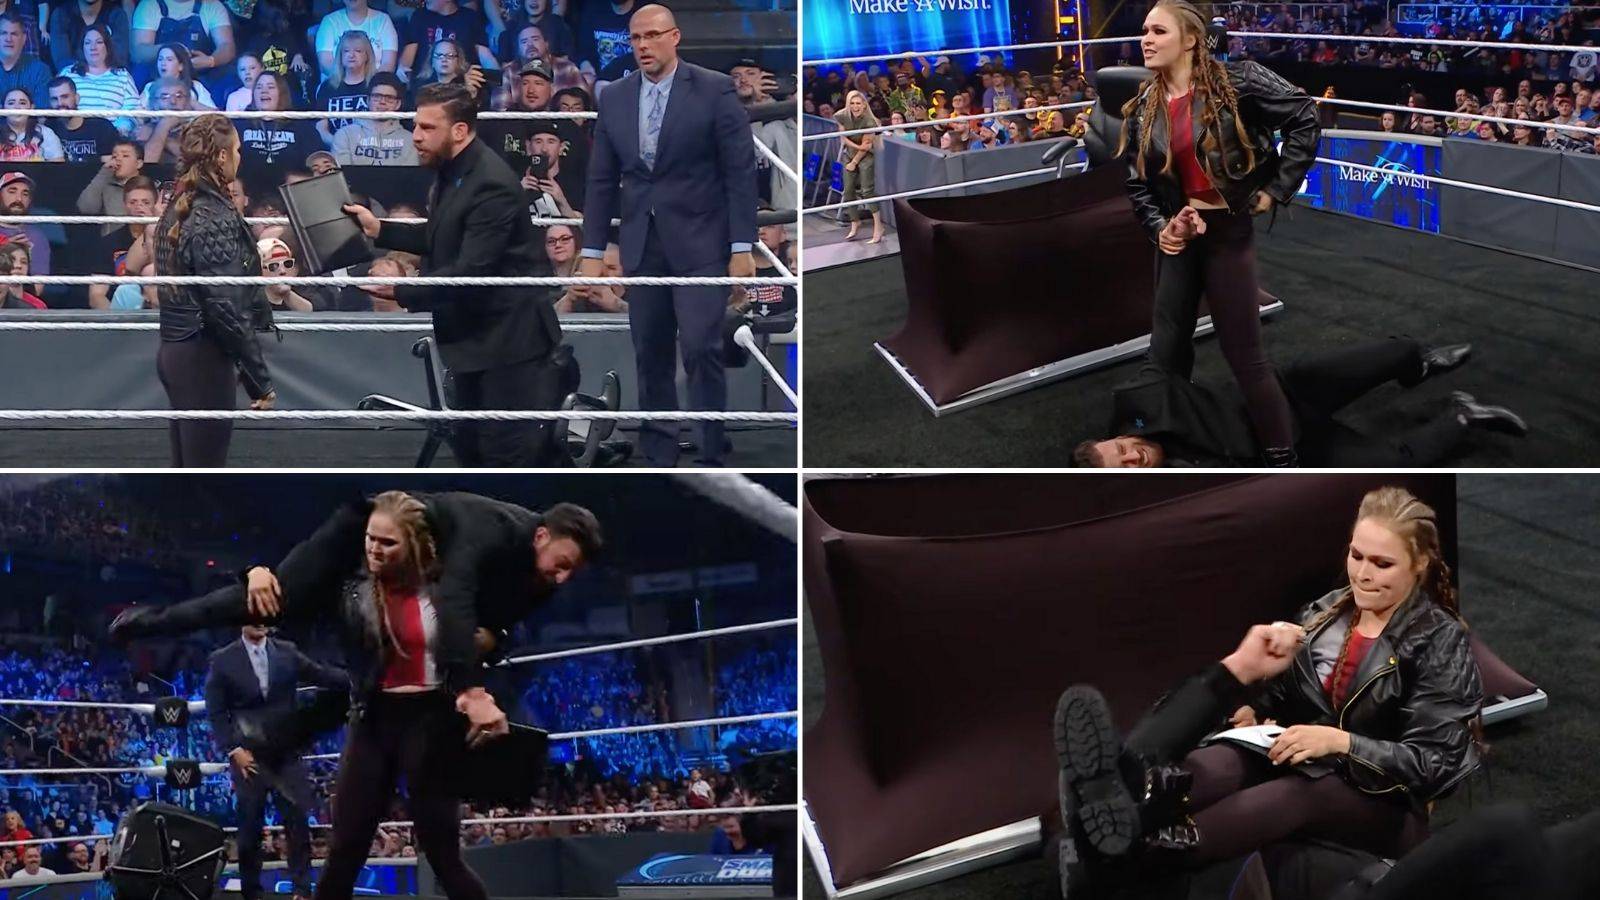 Ronda Rousey attacks Drew Gulak on WWE SmackDown